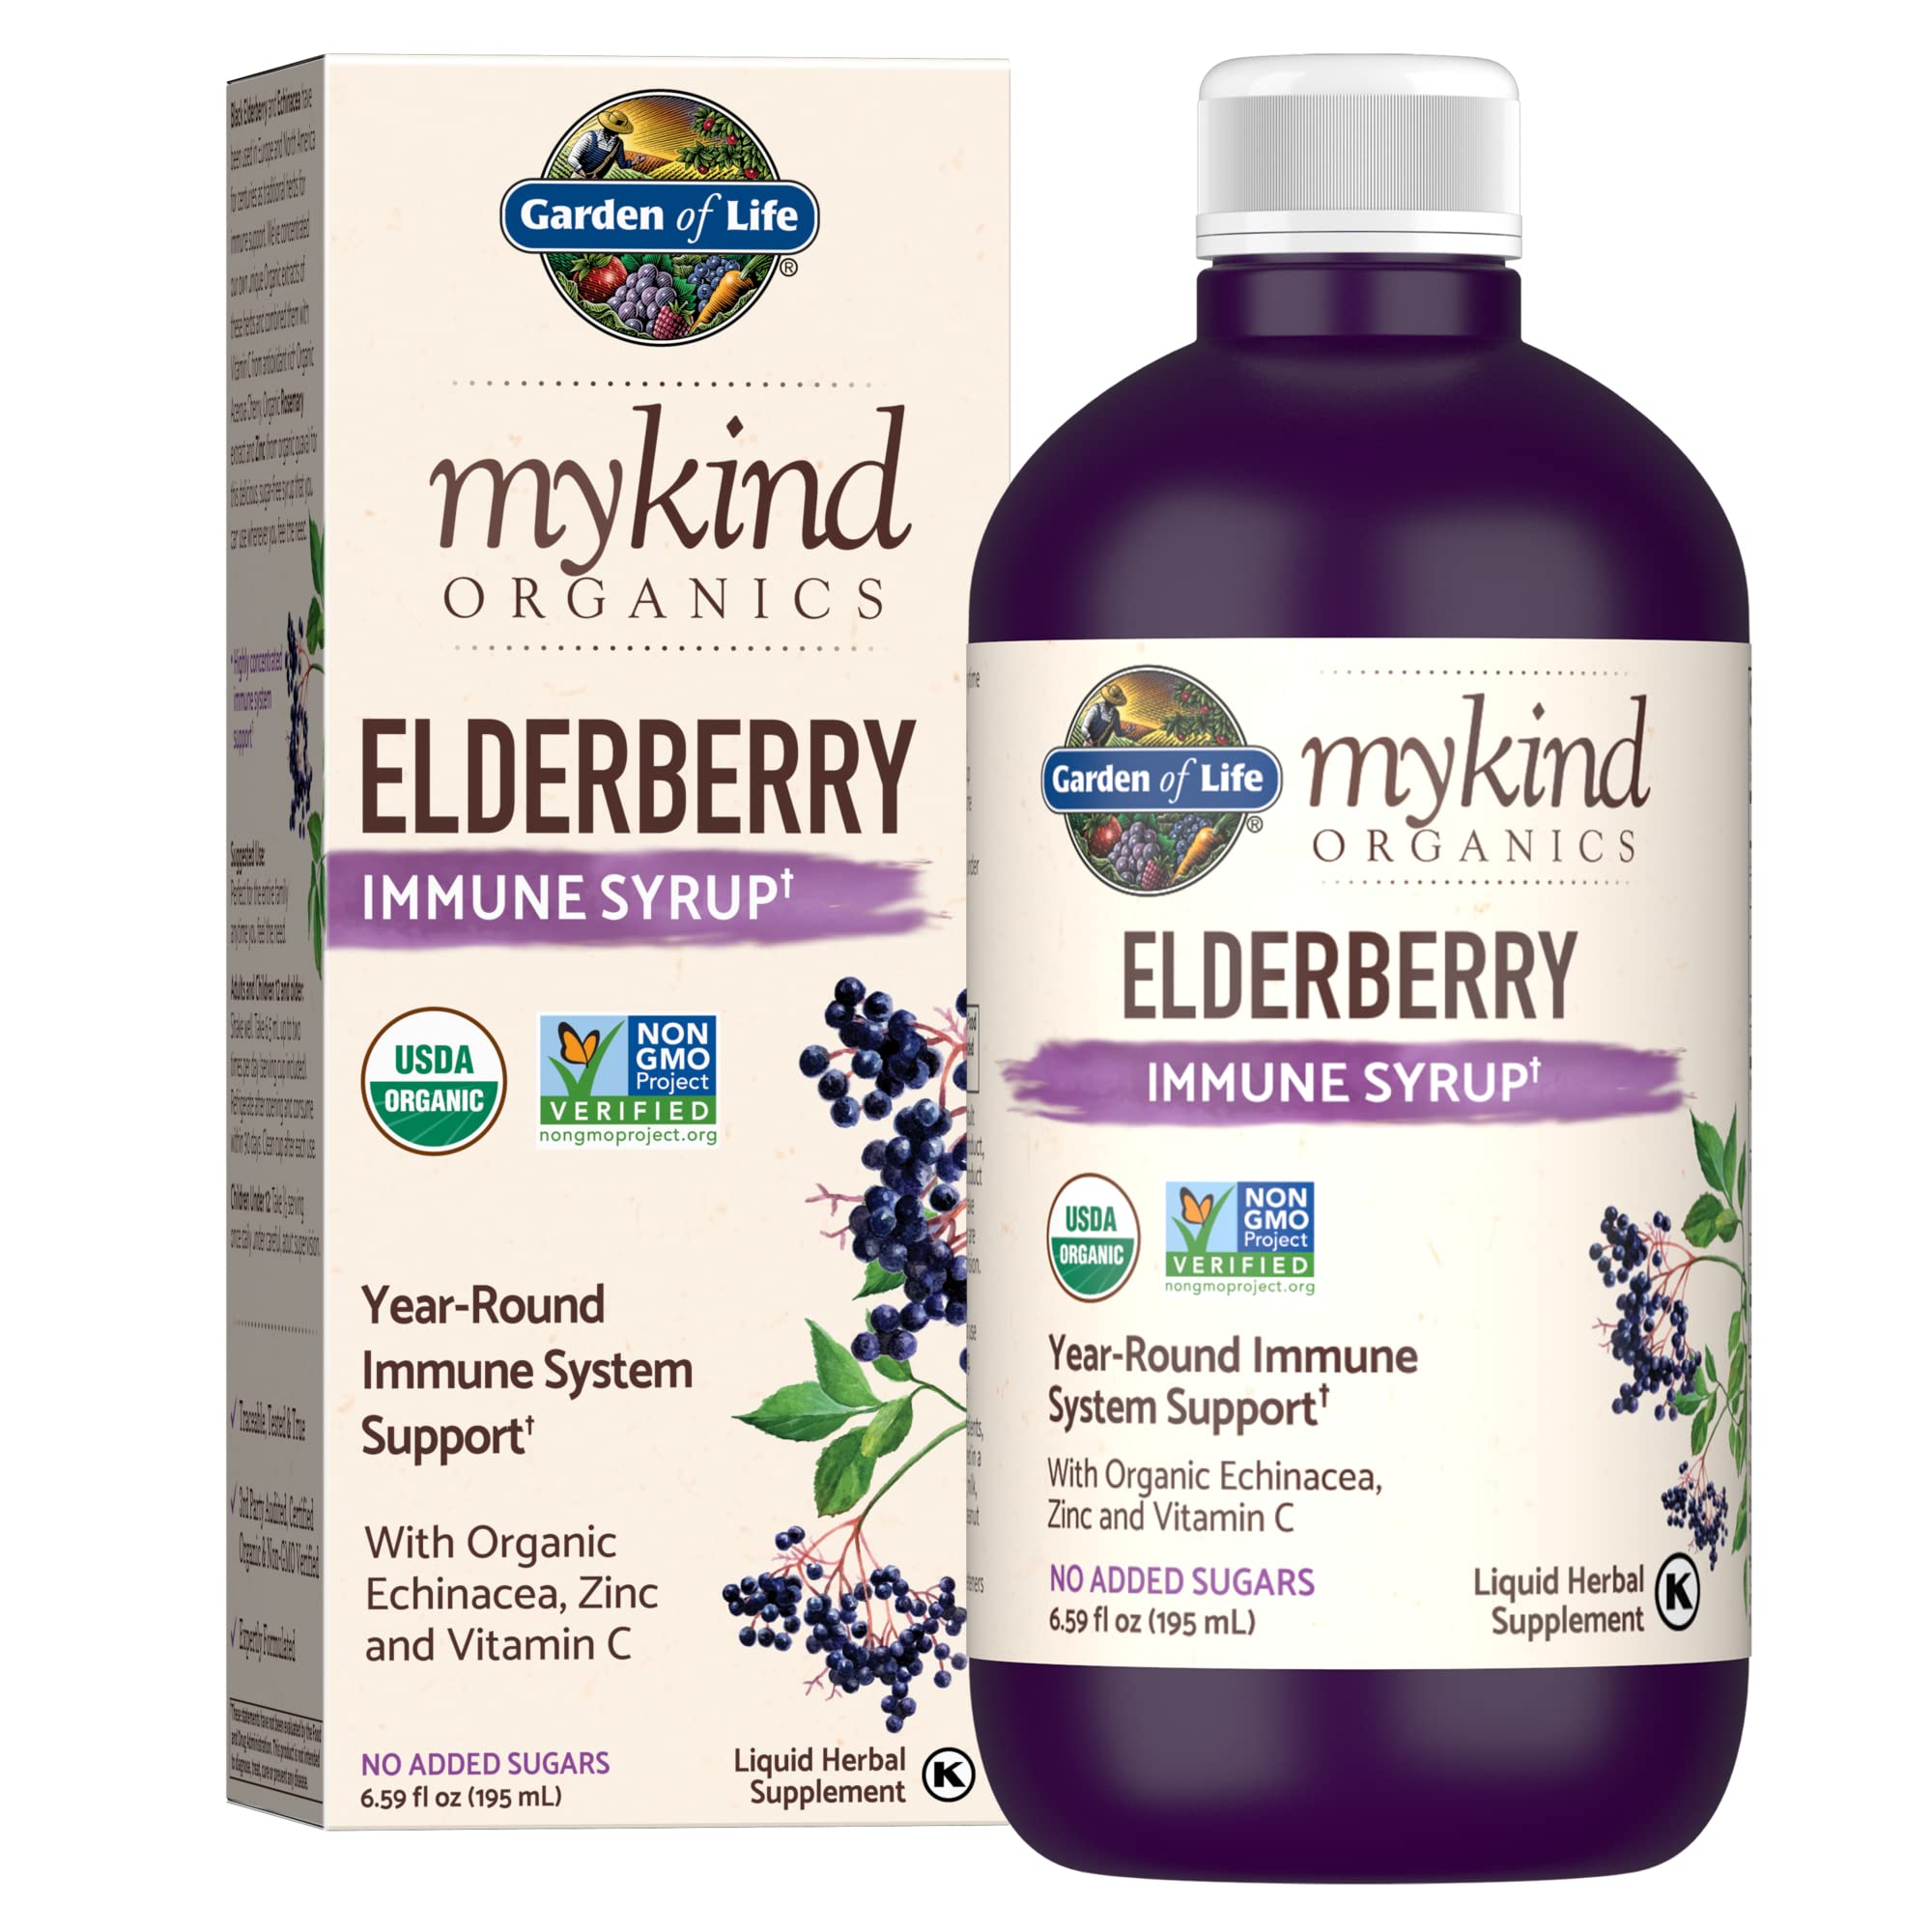 Garden of Life Organics Plant-Based Elderberry Immune Syrup 6.59 fl oz & Organics Oil of Oregano Seasonal Drops 1fl oz (30 mL) Liquid